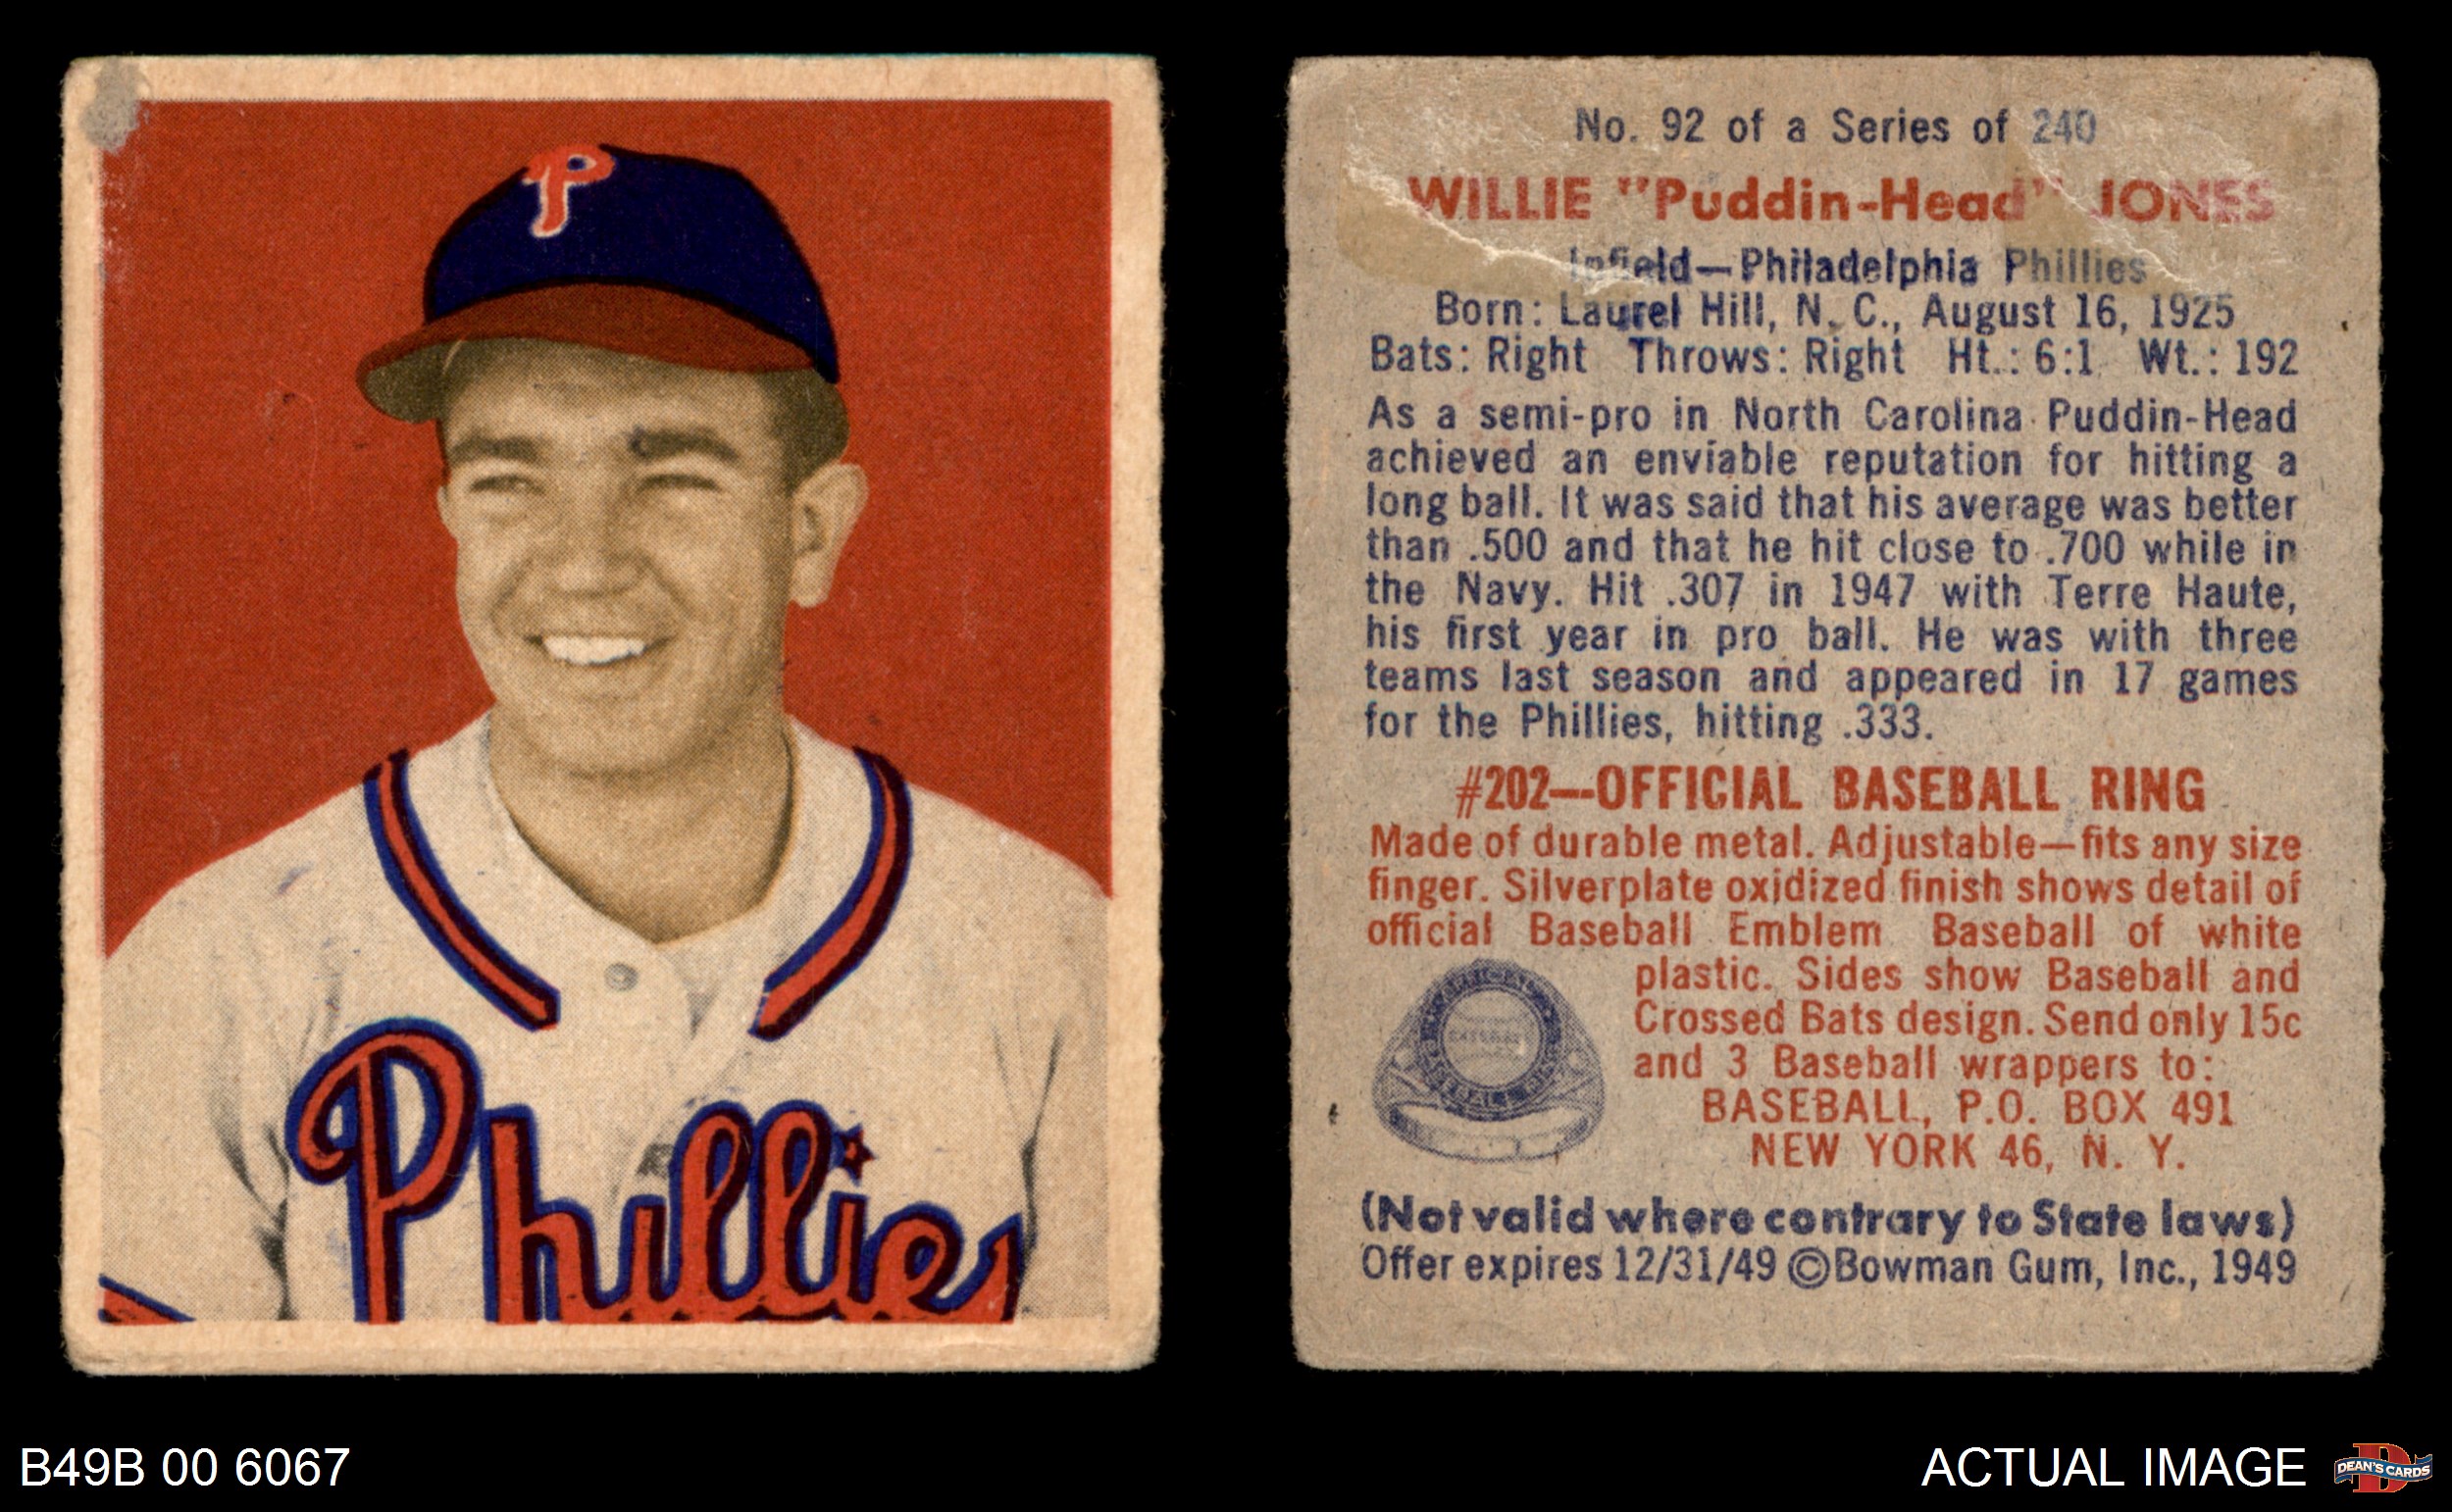 1949 Bowman Reprint #92 Willie Puddin-Head Jones Card Philadelphia Phillies 